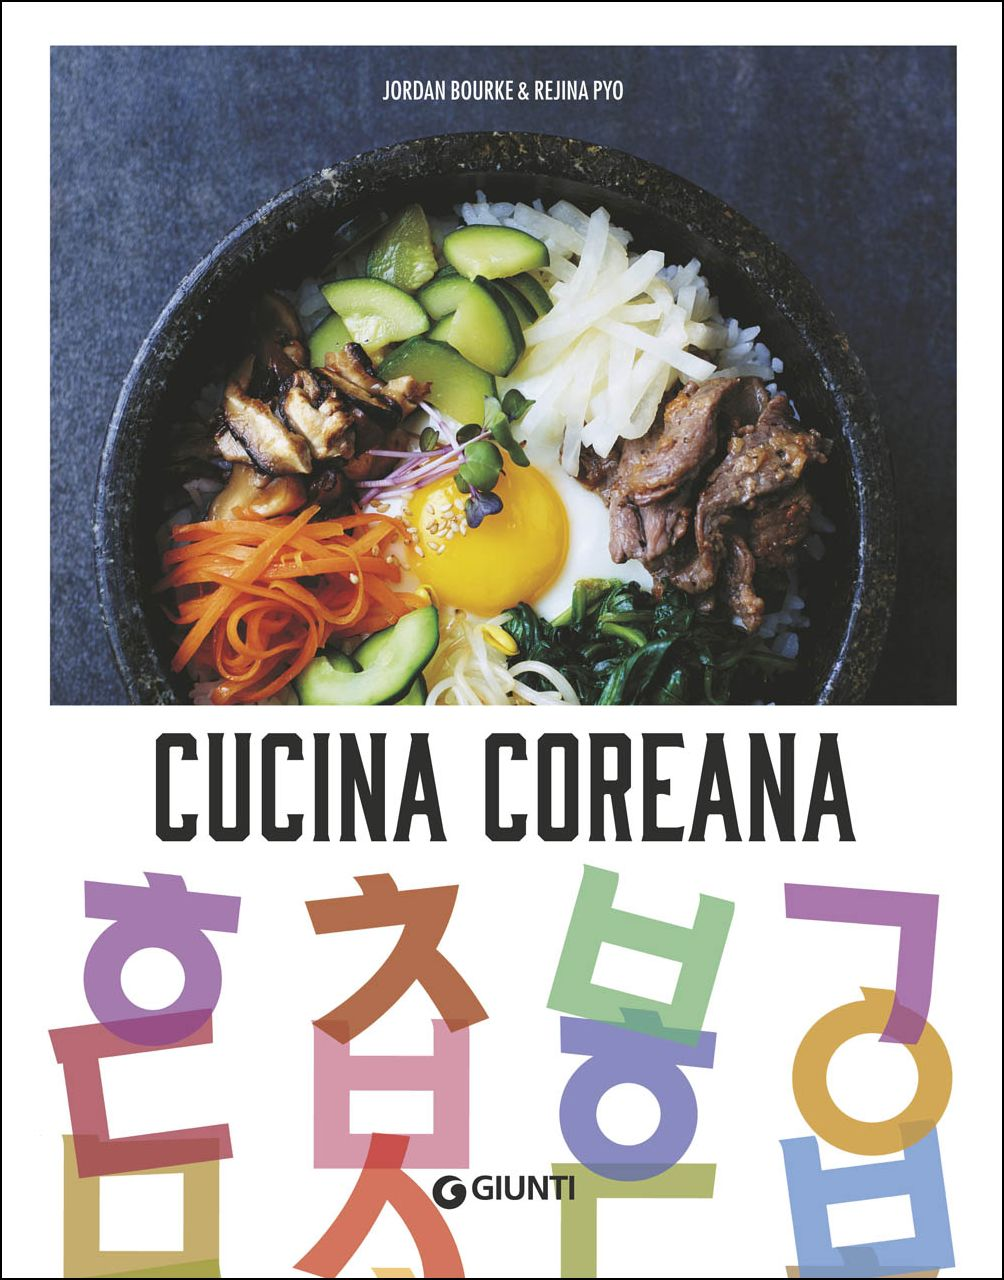 Image of Cucina coreana